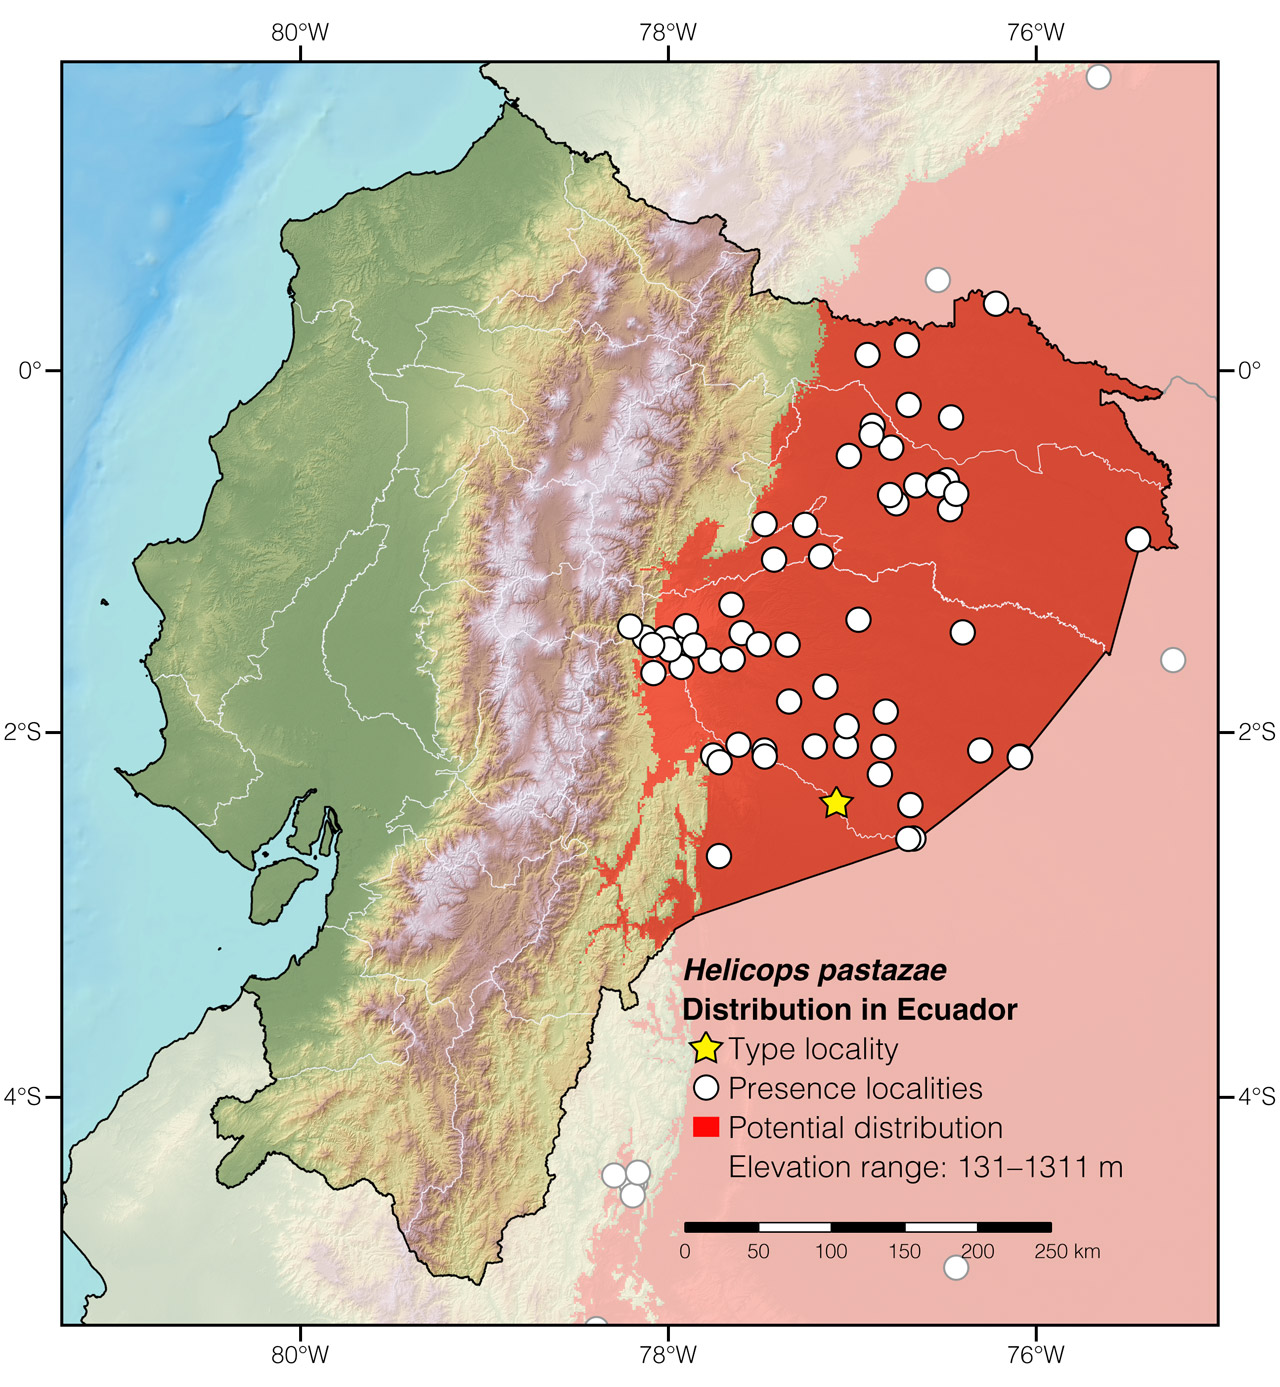 Distribution of Helicops pastazae in Ecuador